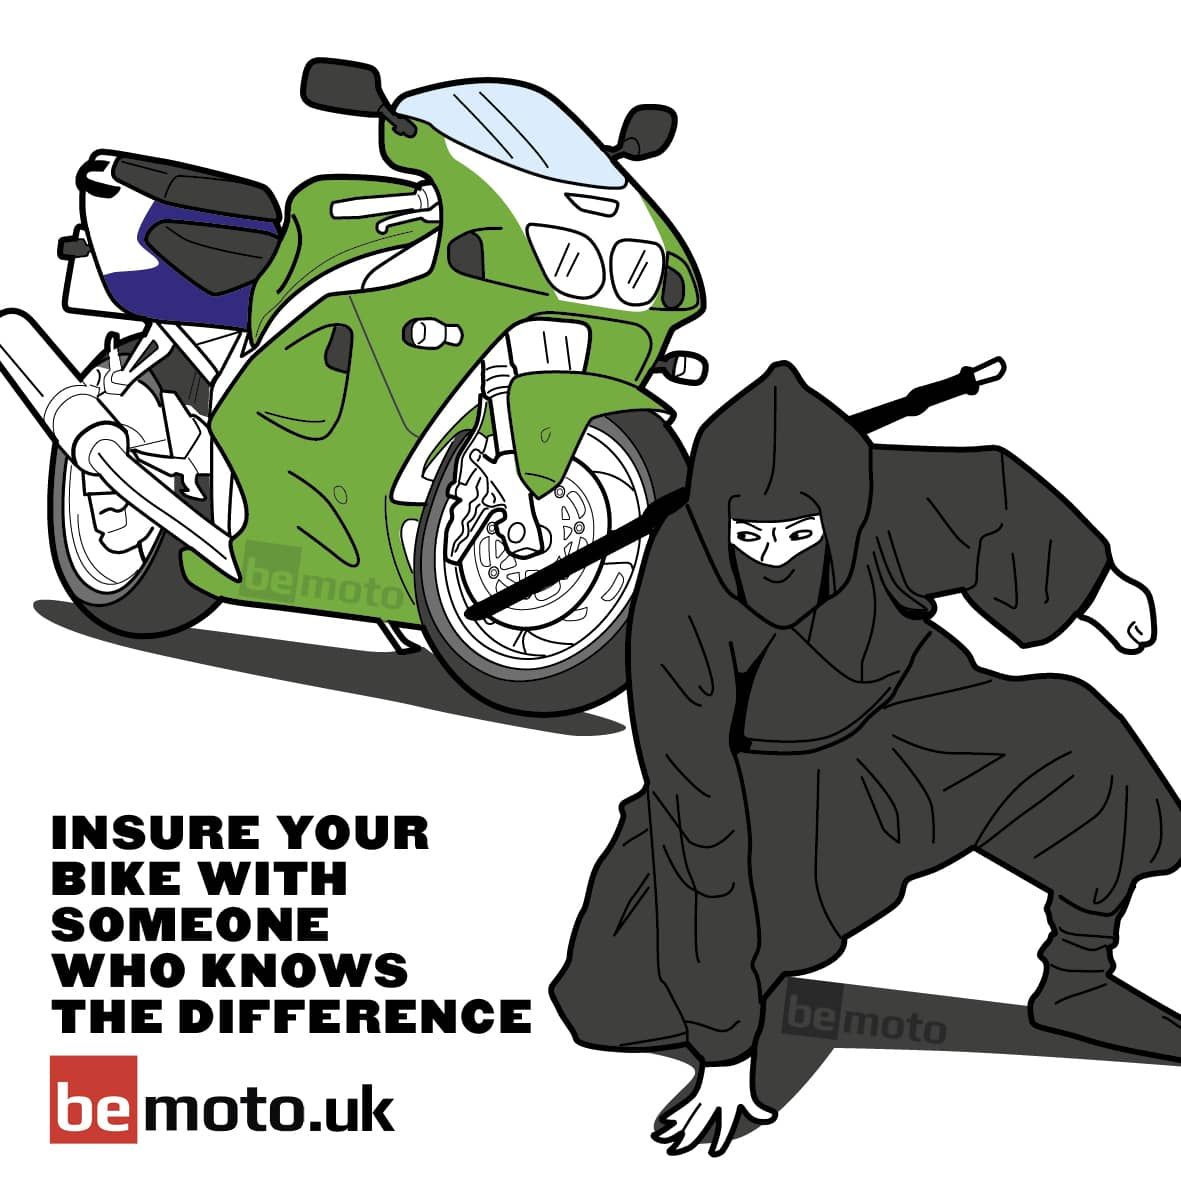 Moto Moto likes you : r/memes